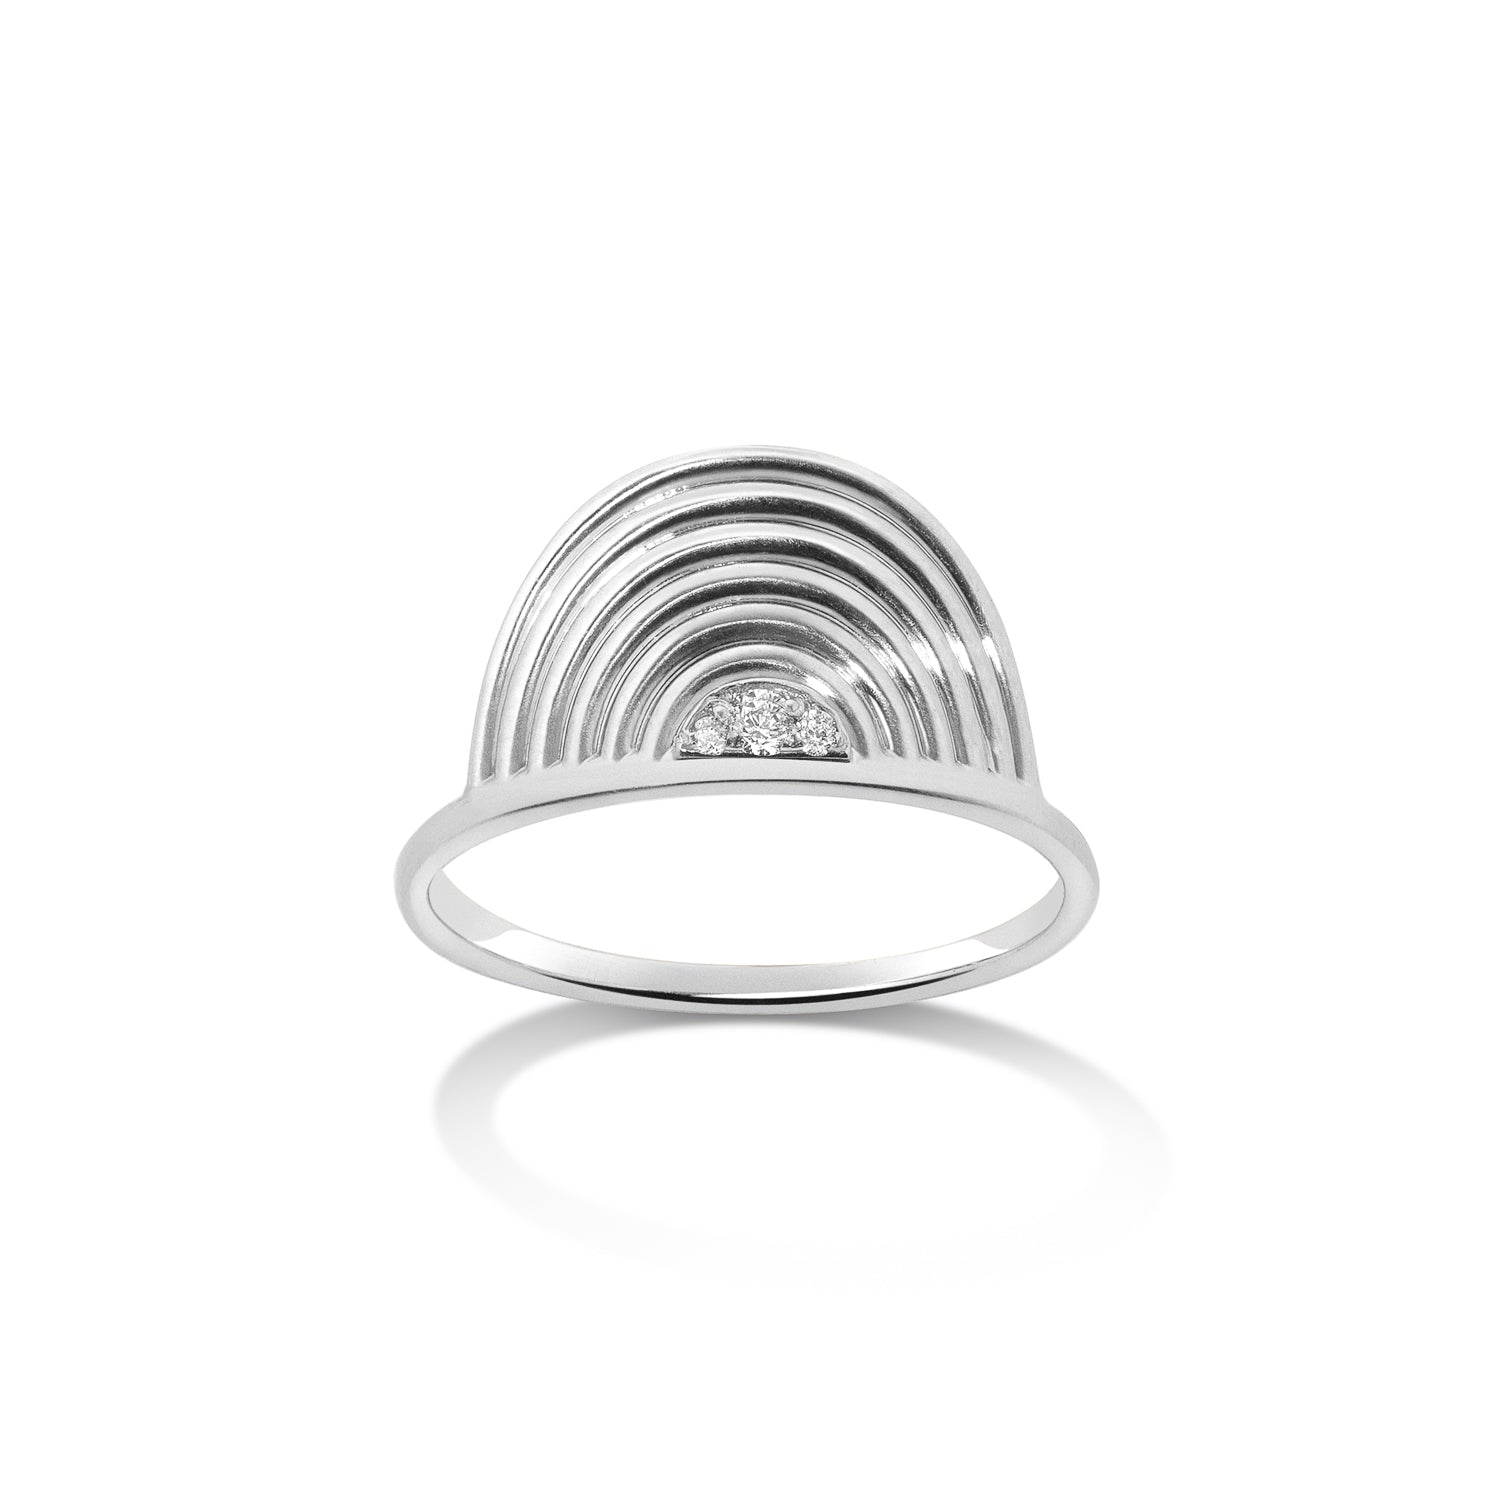 Helia Semi-Spiral Ring